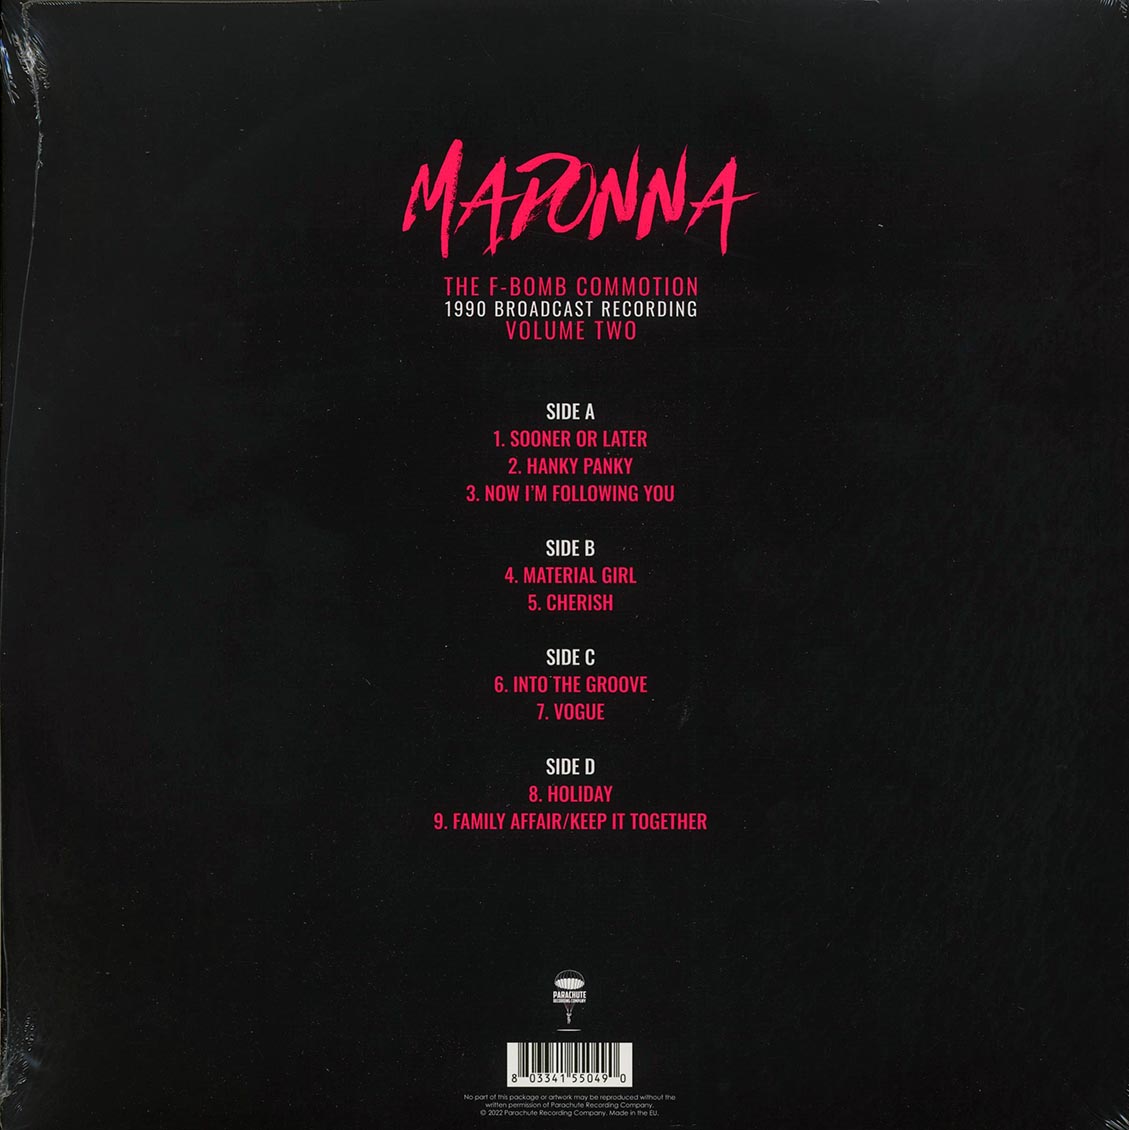 Madonna - The F-bomb Commotion Volume 2: 1990 Broadcast Recording (2xLP) - Vinyl LP, LP